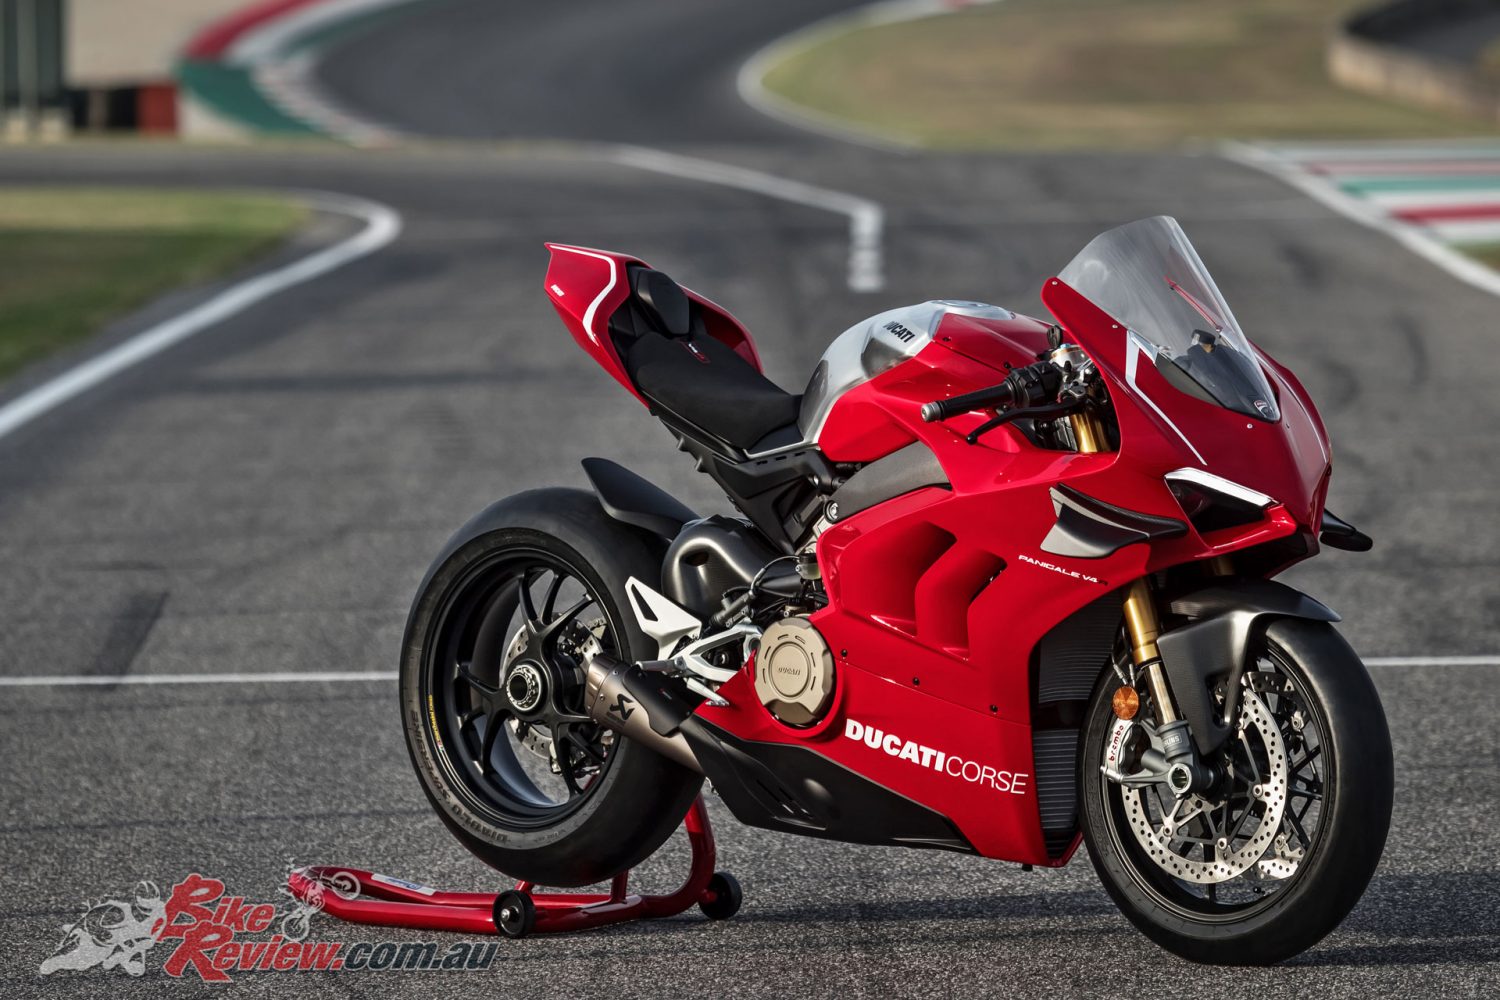 Ducati Panigale V4 S 2019 photo - 1